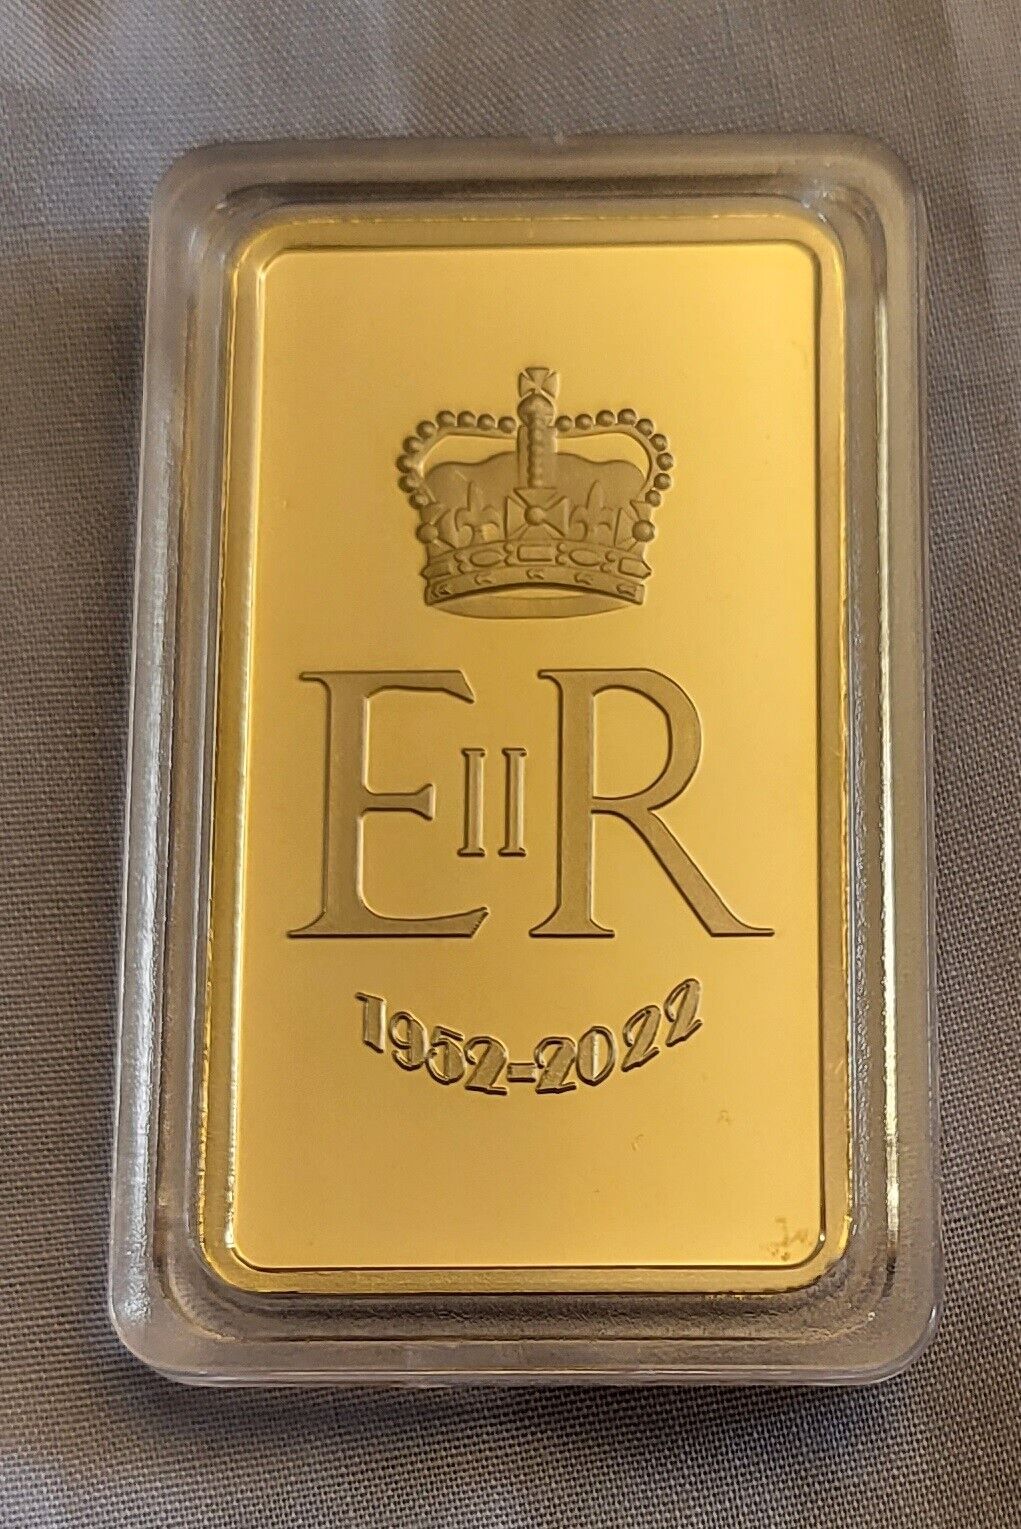 Queen Elizabeth II Gold Bar Platinum Jubilee ingot Royal Family King Charles USA